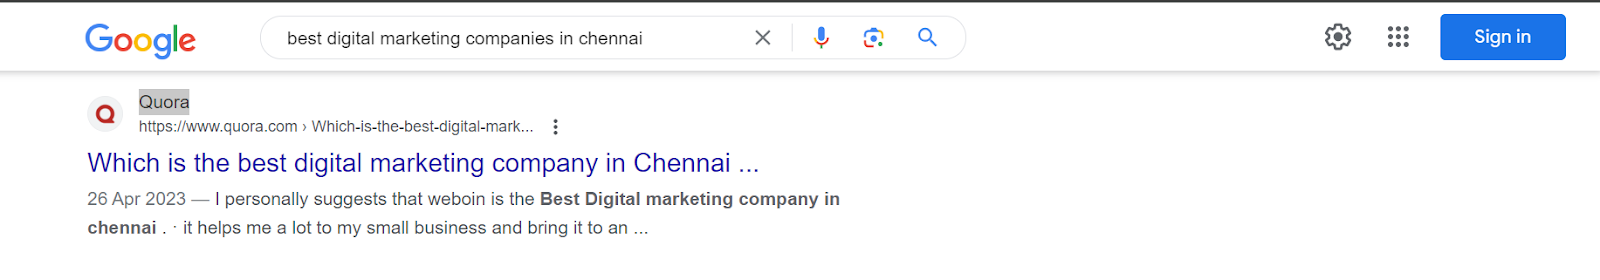 Best digital marketing companies in Chennai